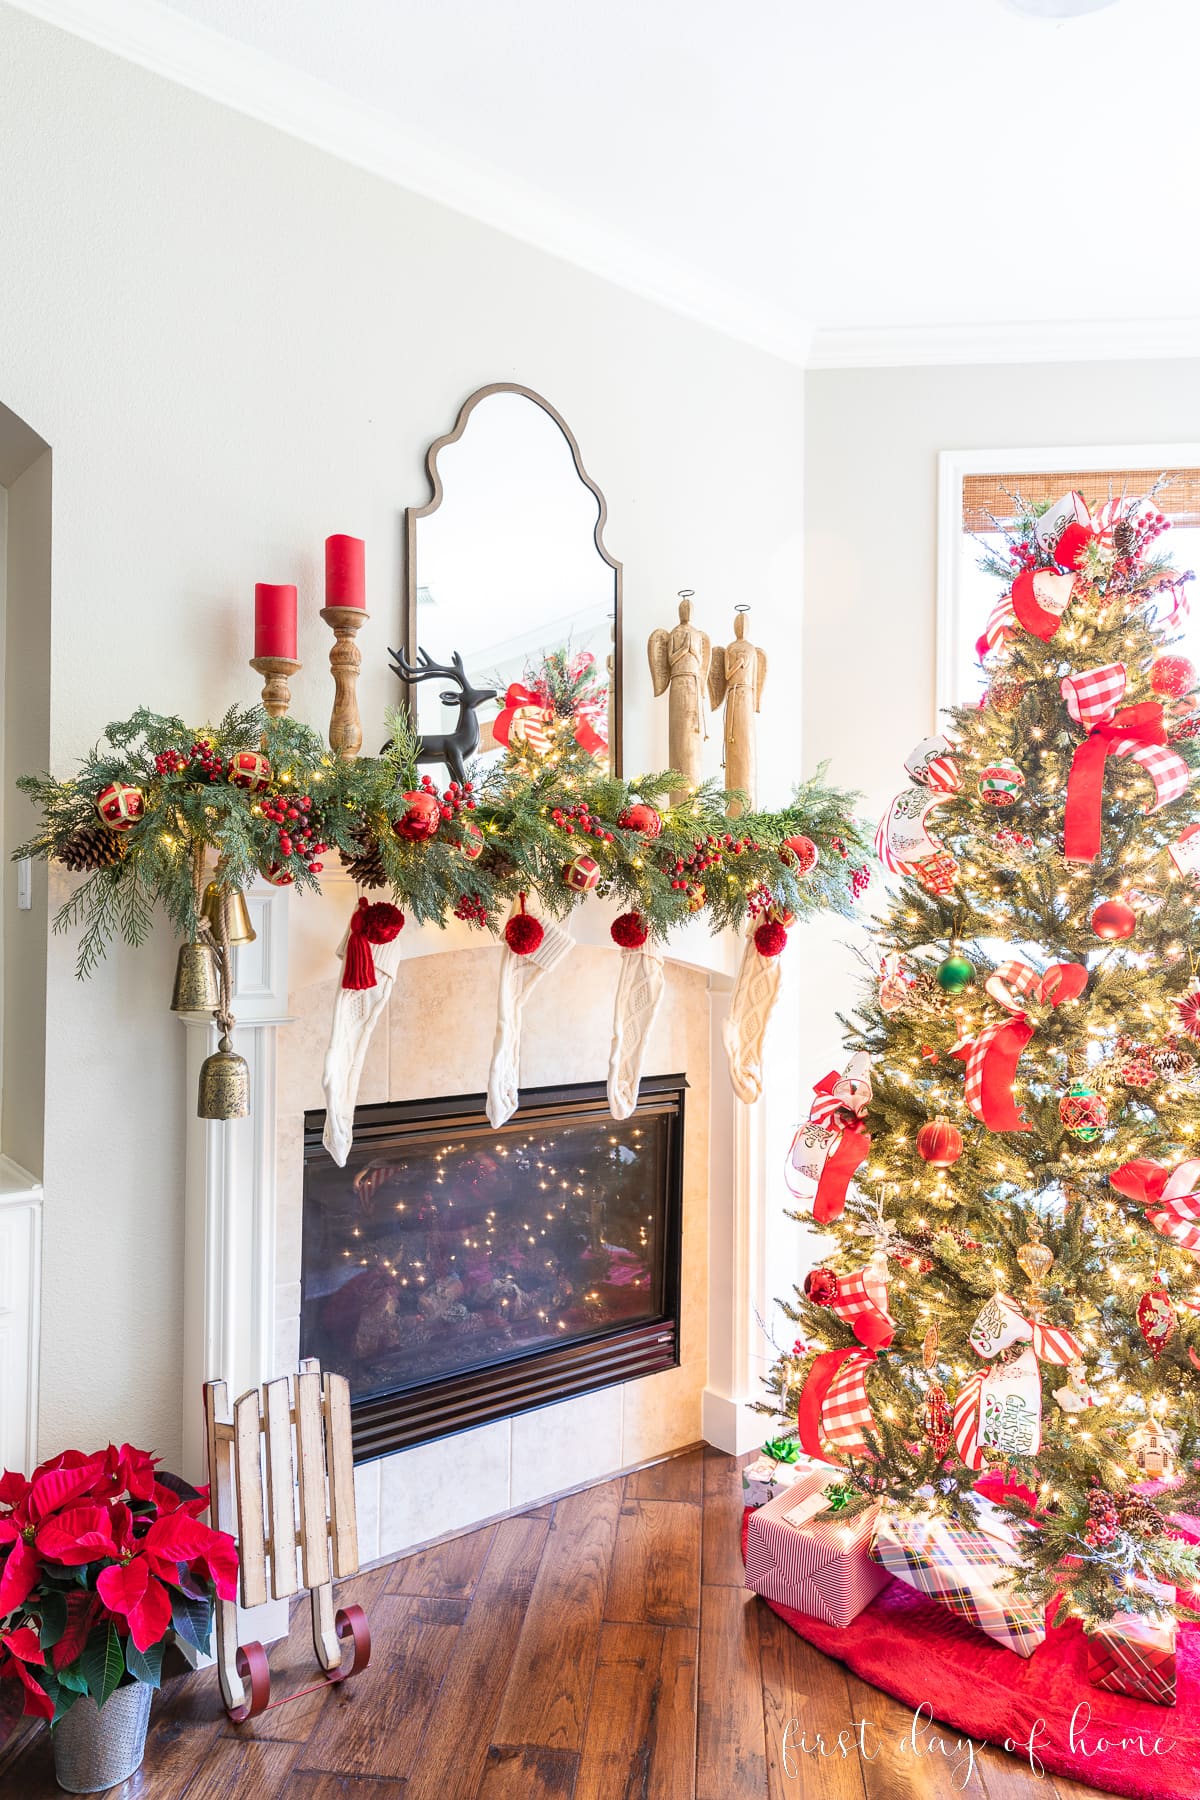 View of Christmas mantel decor and Christmas tree from a side angle.